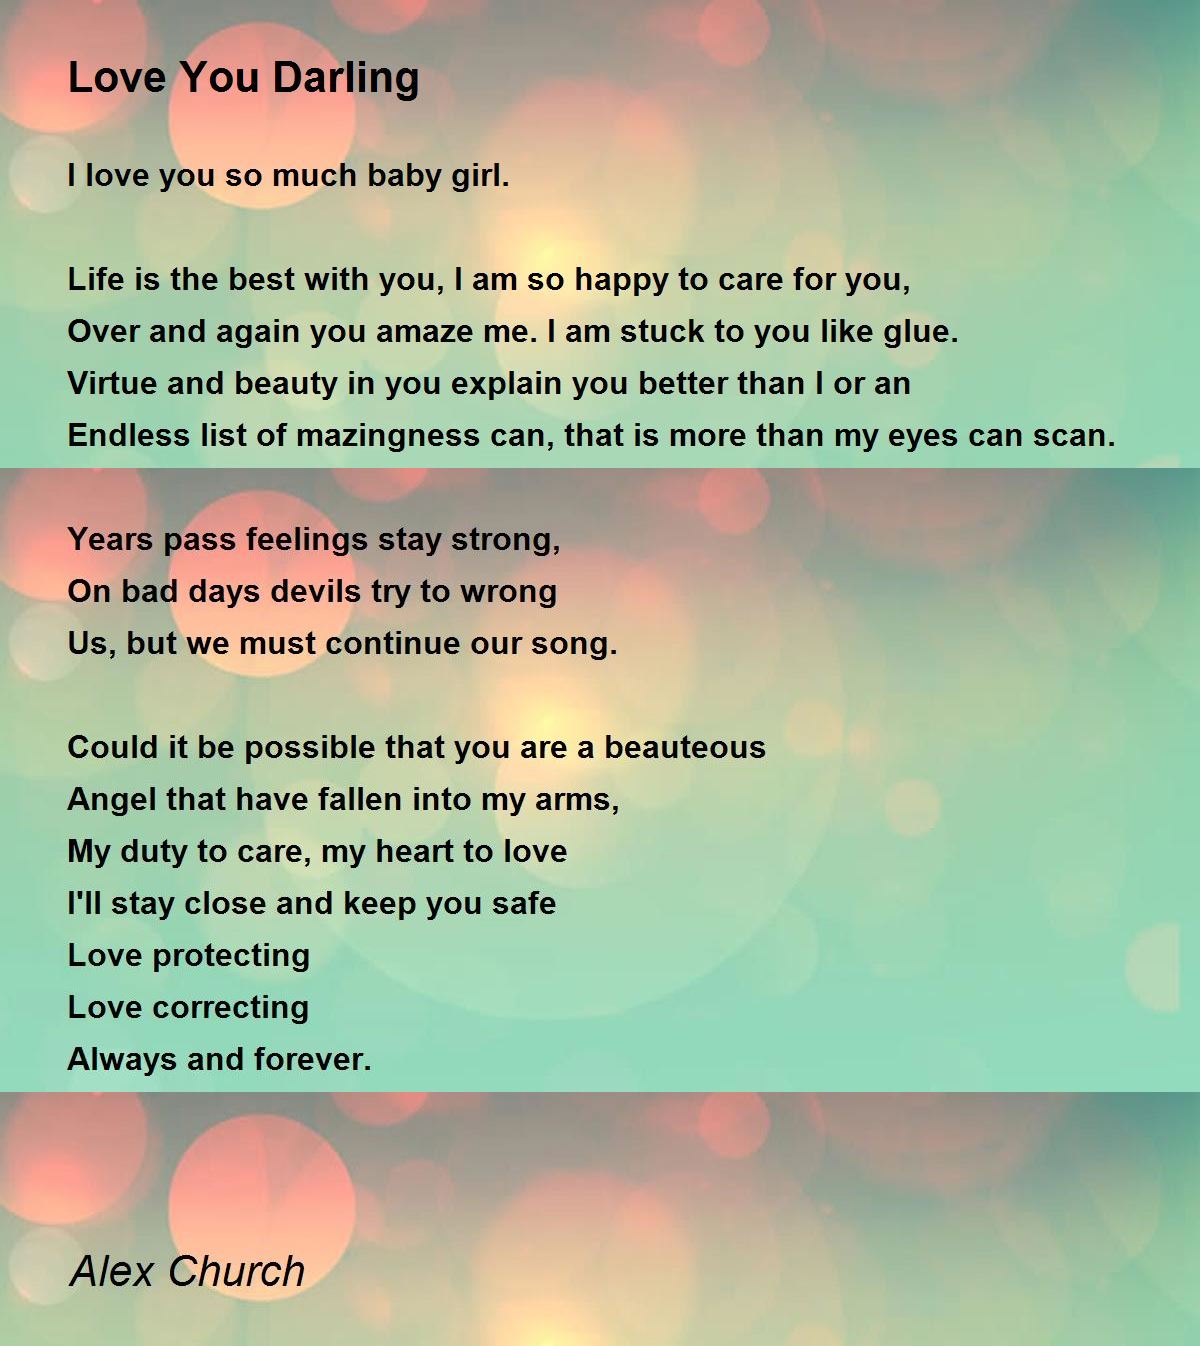 Love You Darling - Love You Darling Poem by Alex Church